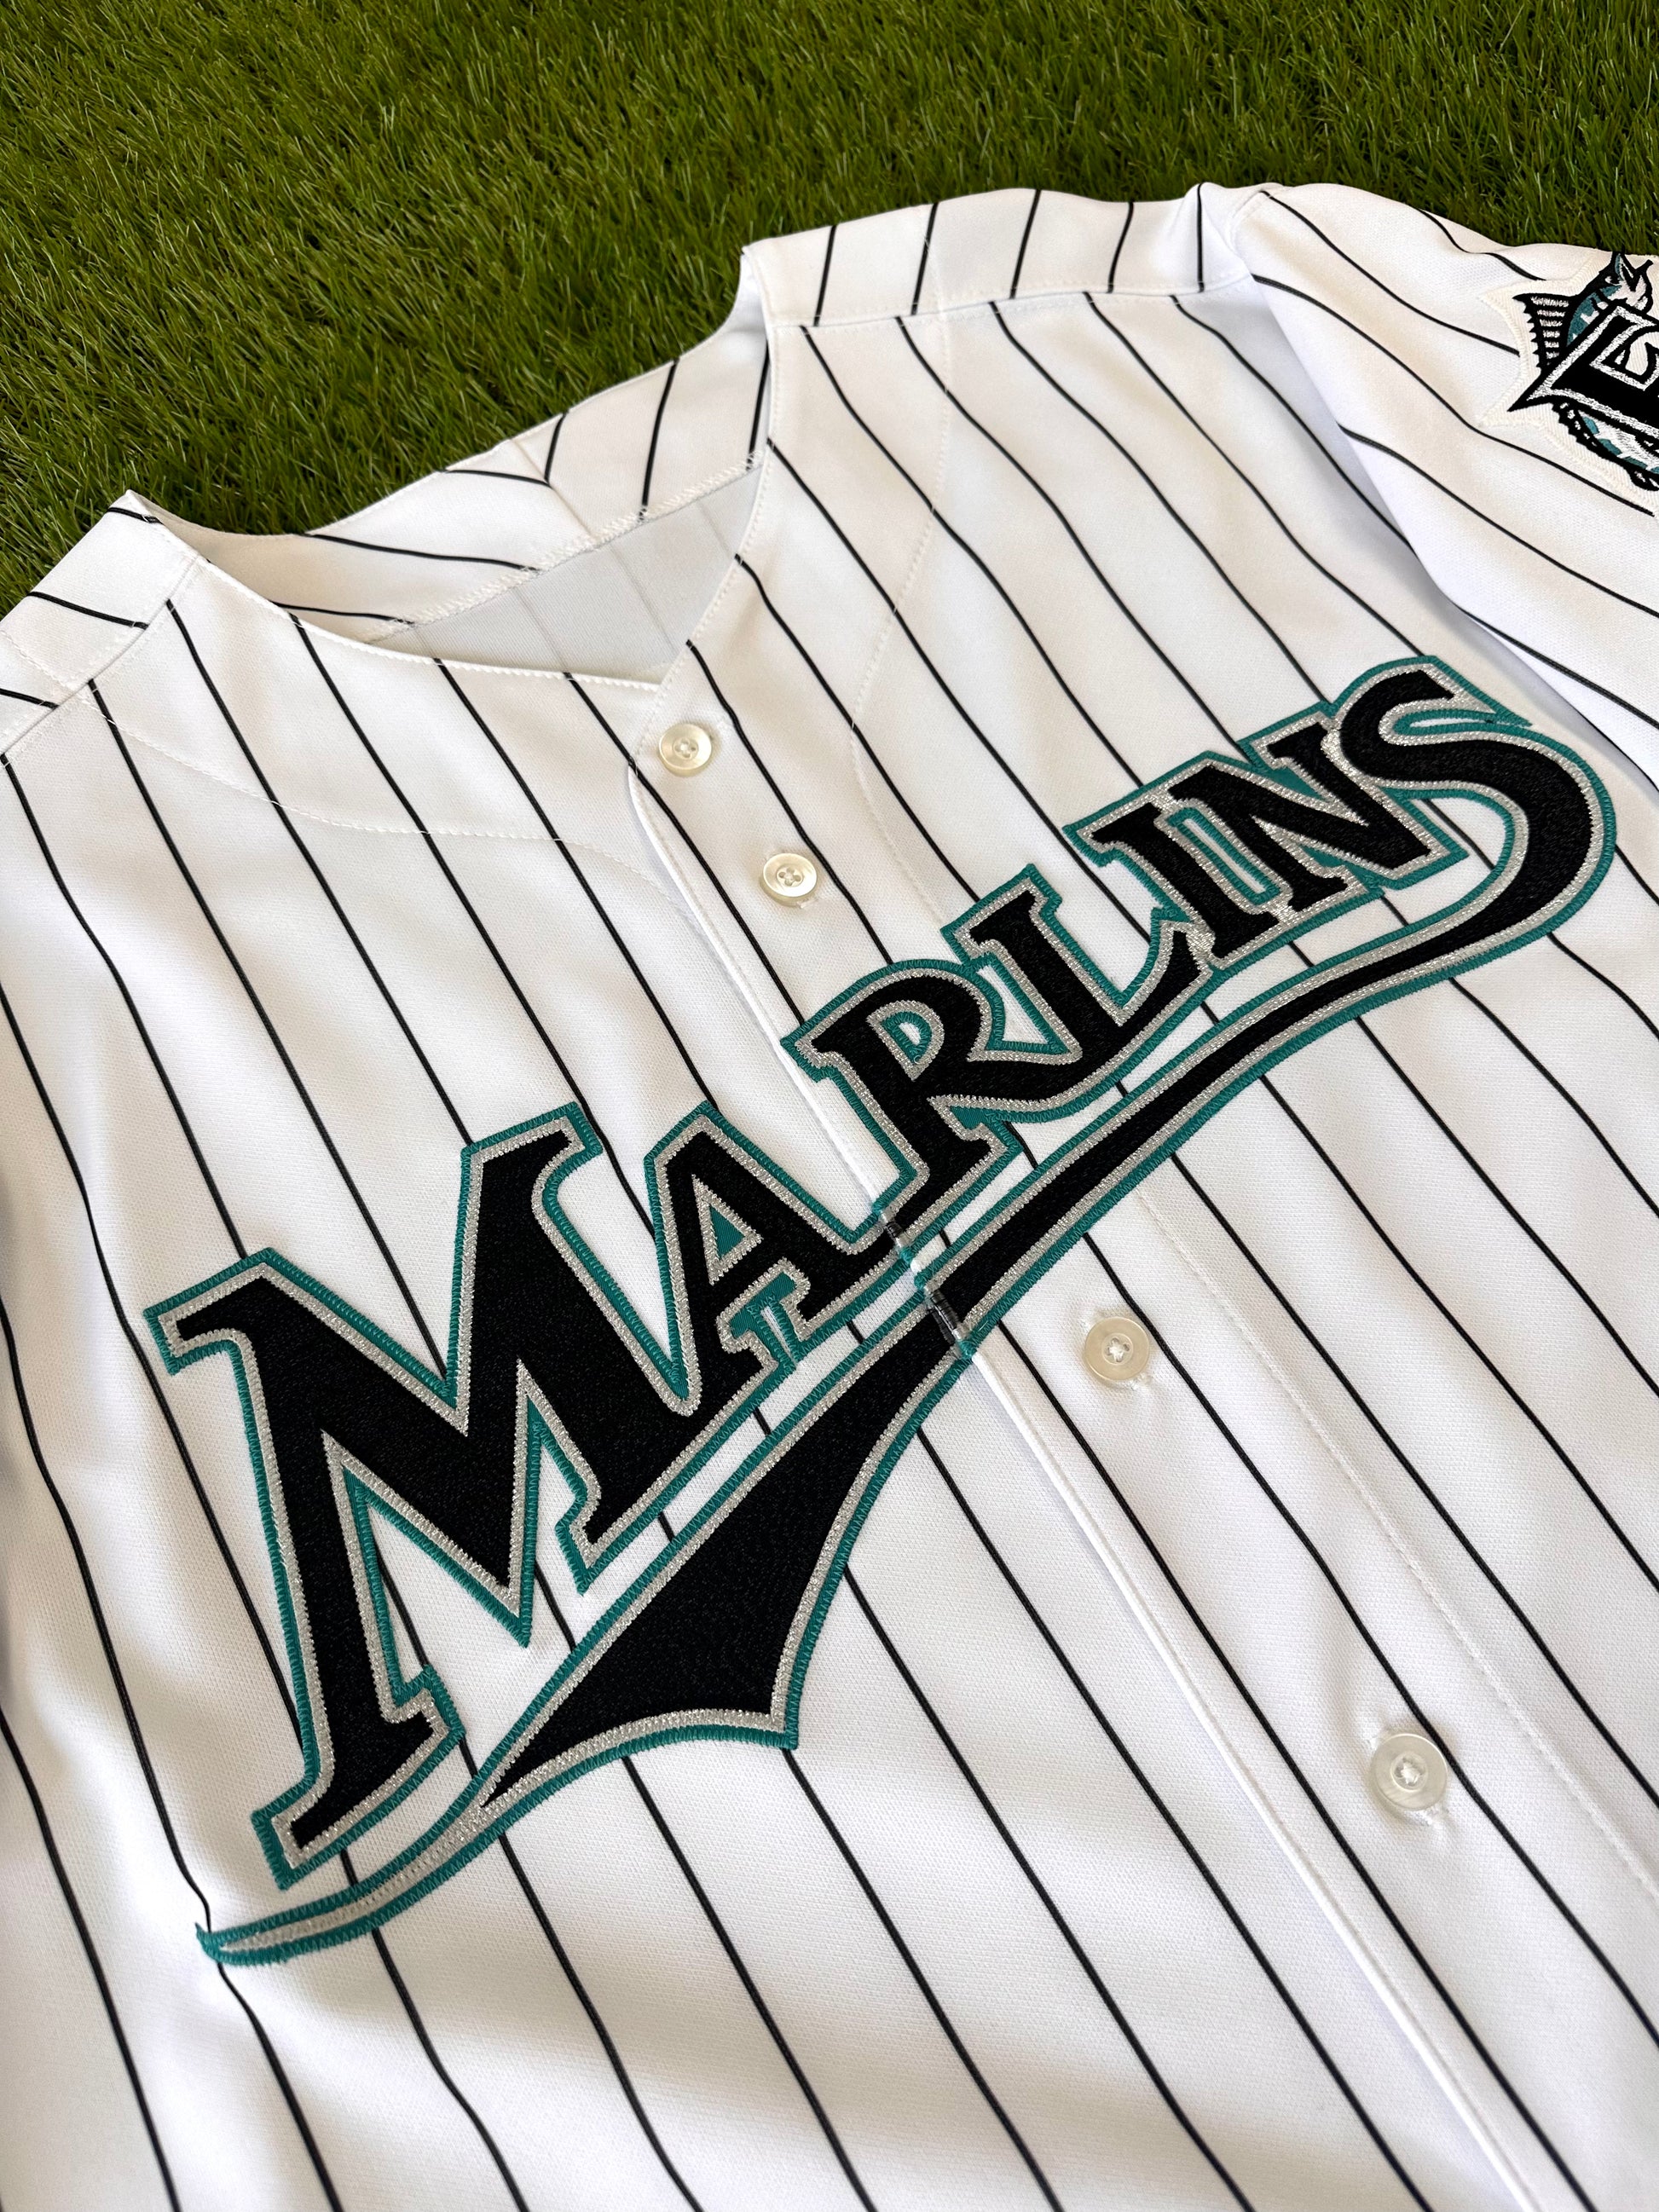 Florida Marlins 2007 Dan Uggla MLB Baseball Jersey (48/XL)